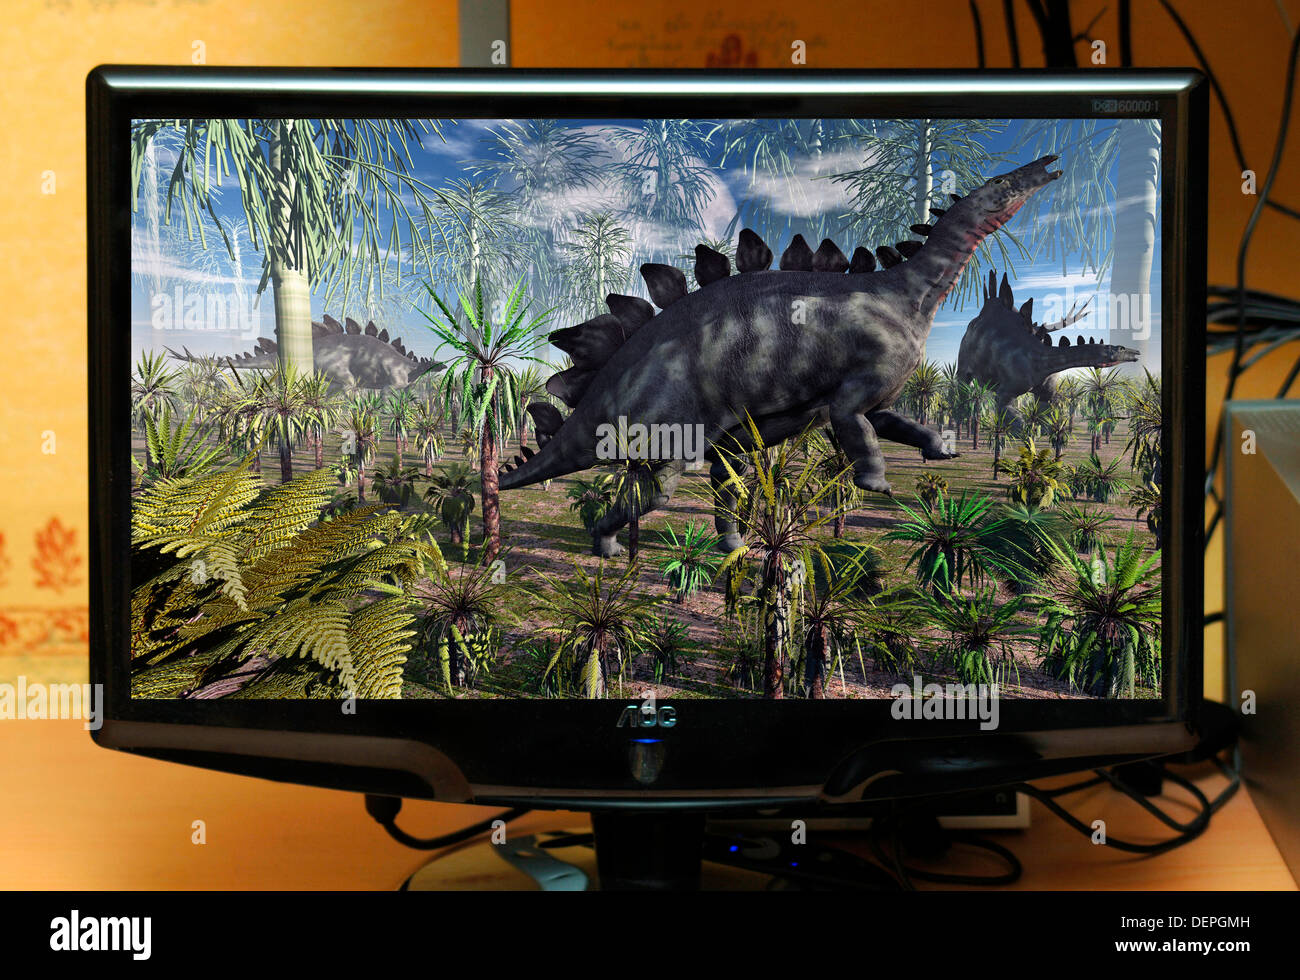 Stegosaurus Dinosaurs On A Computer Monitor Screen. Stock Photo